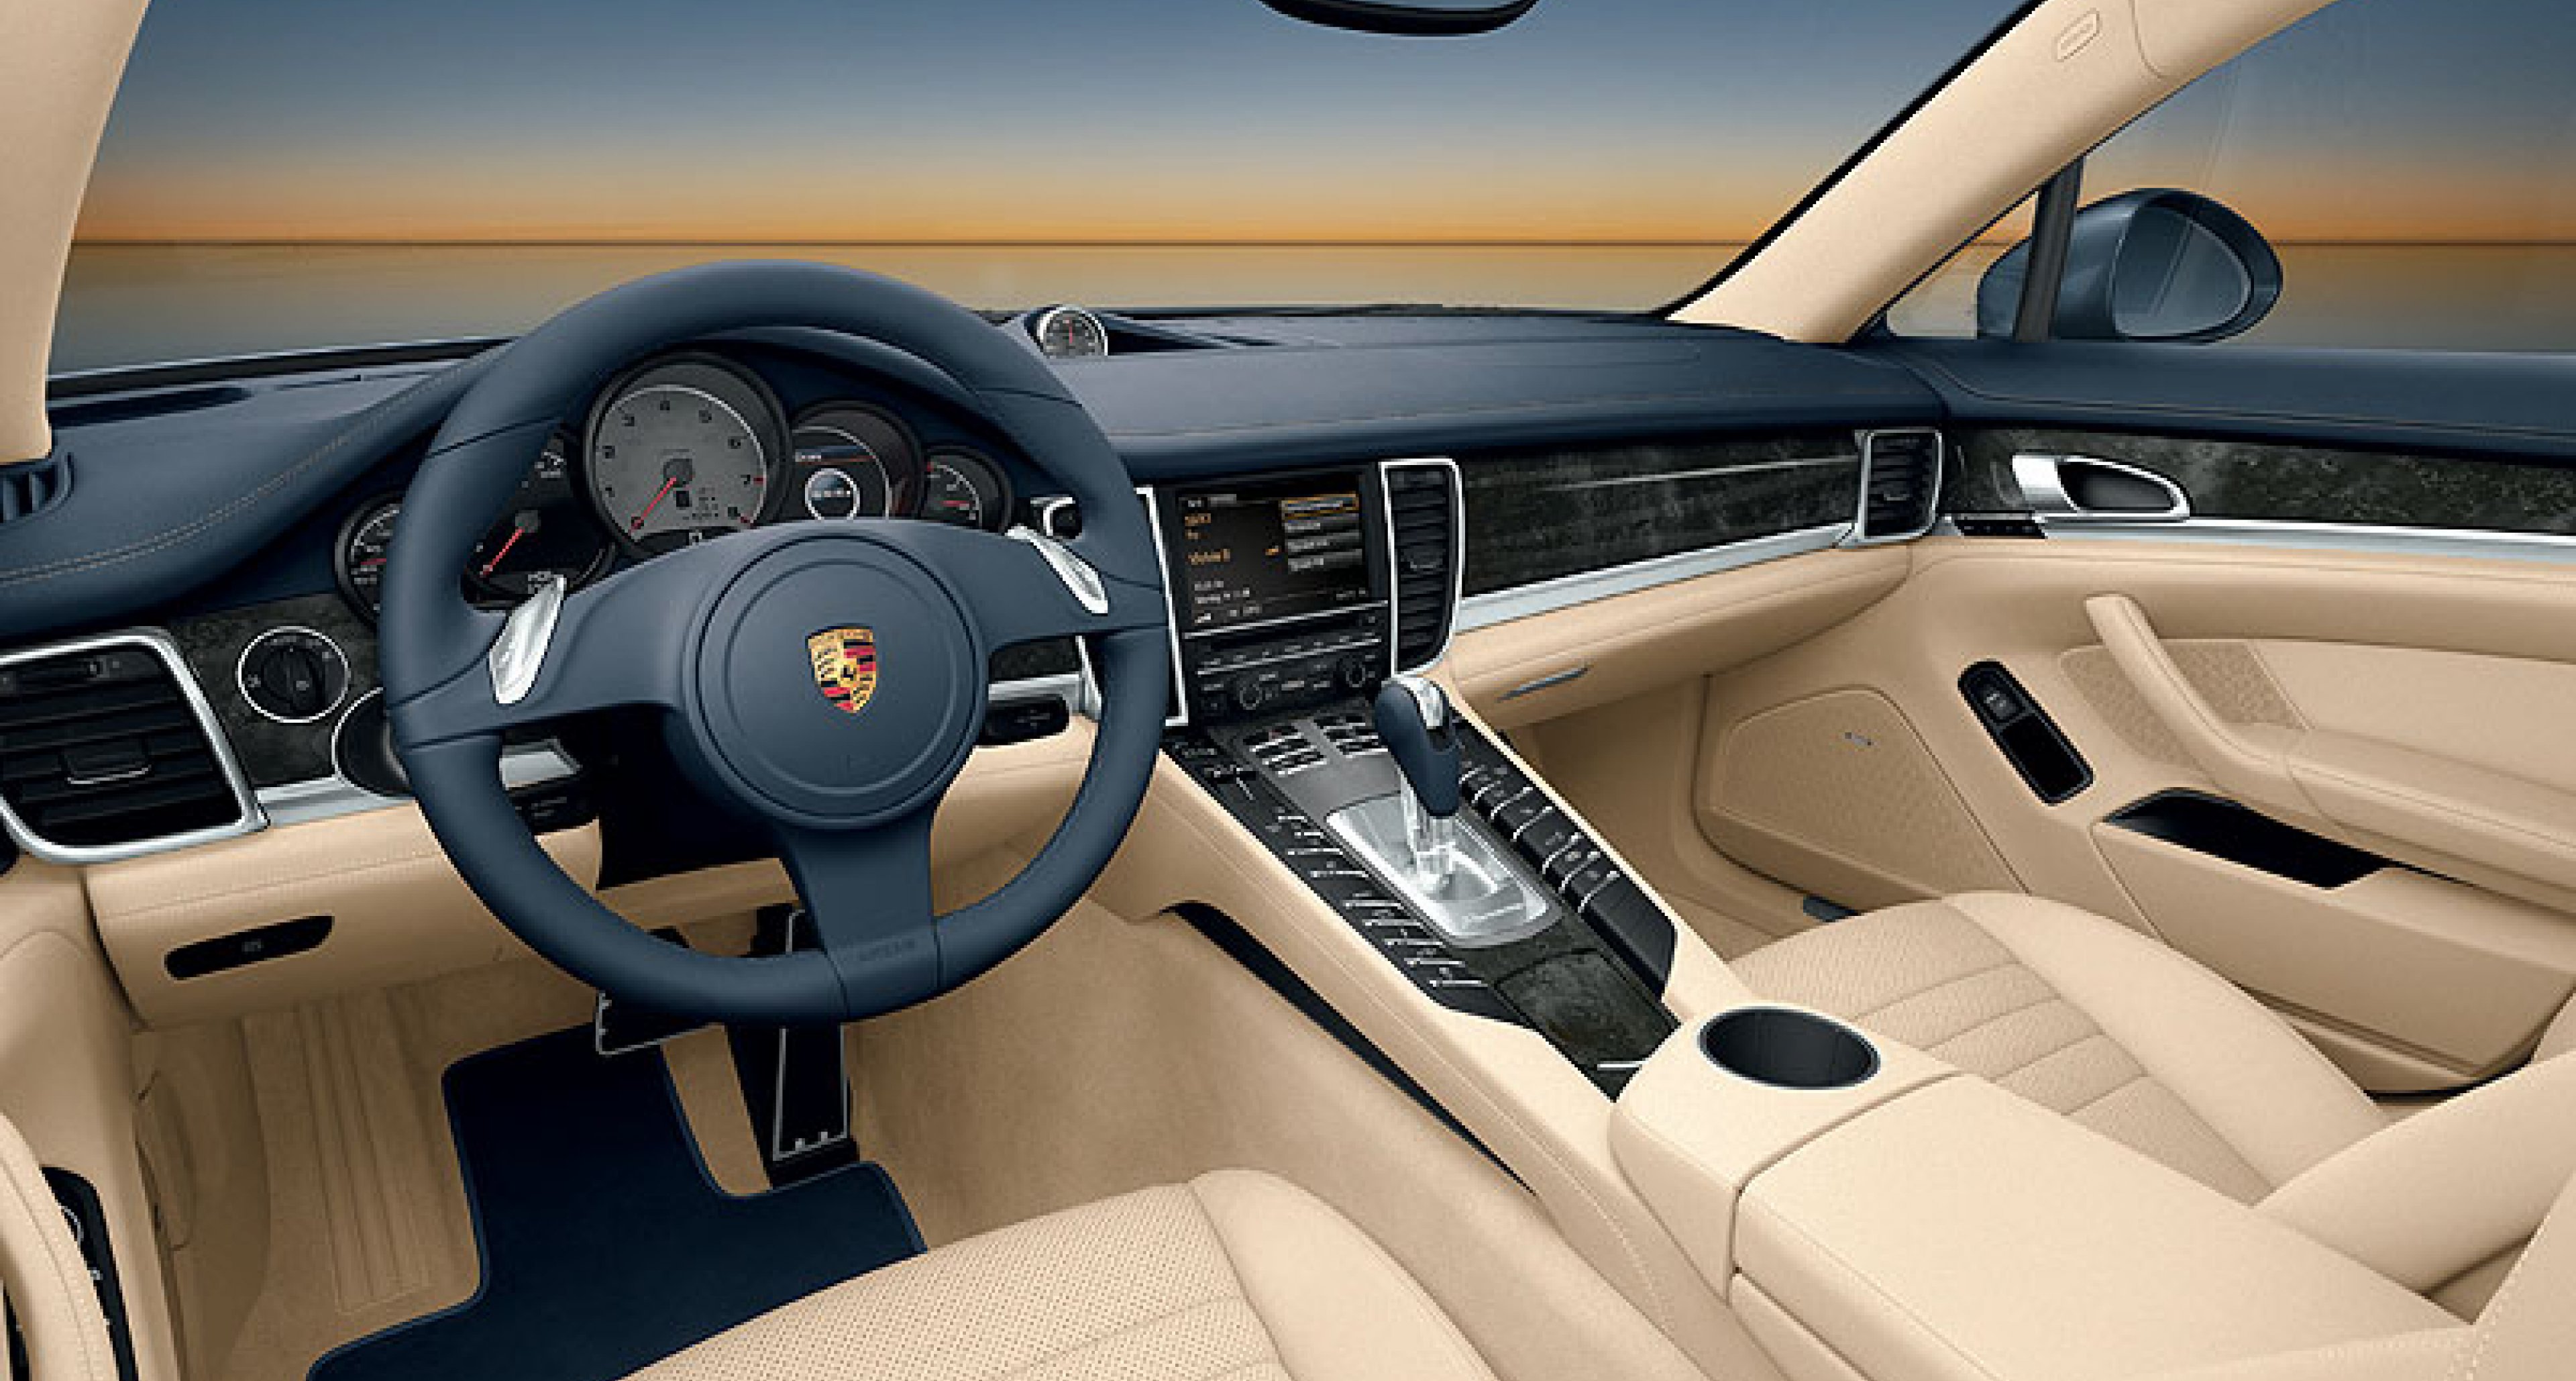 Porsche Panamera Interior Design And European Pricing